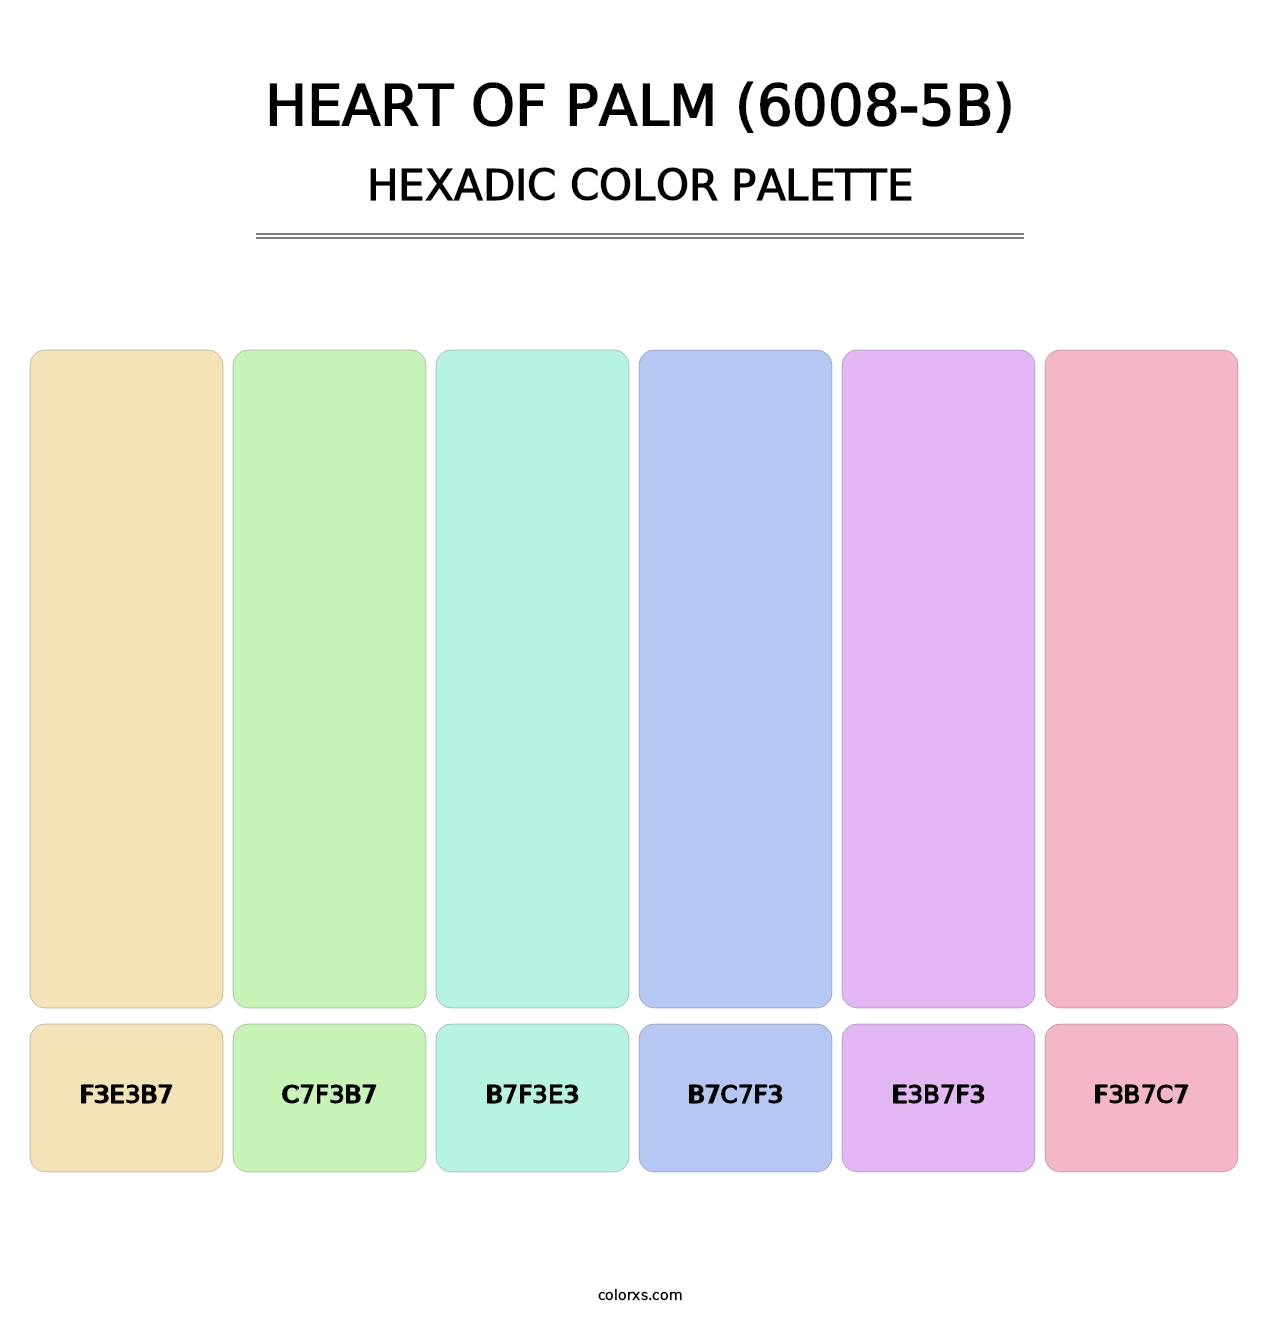 Heart of Palm (6008-5B) - Hexadic Color Palette